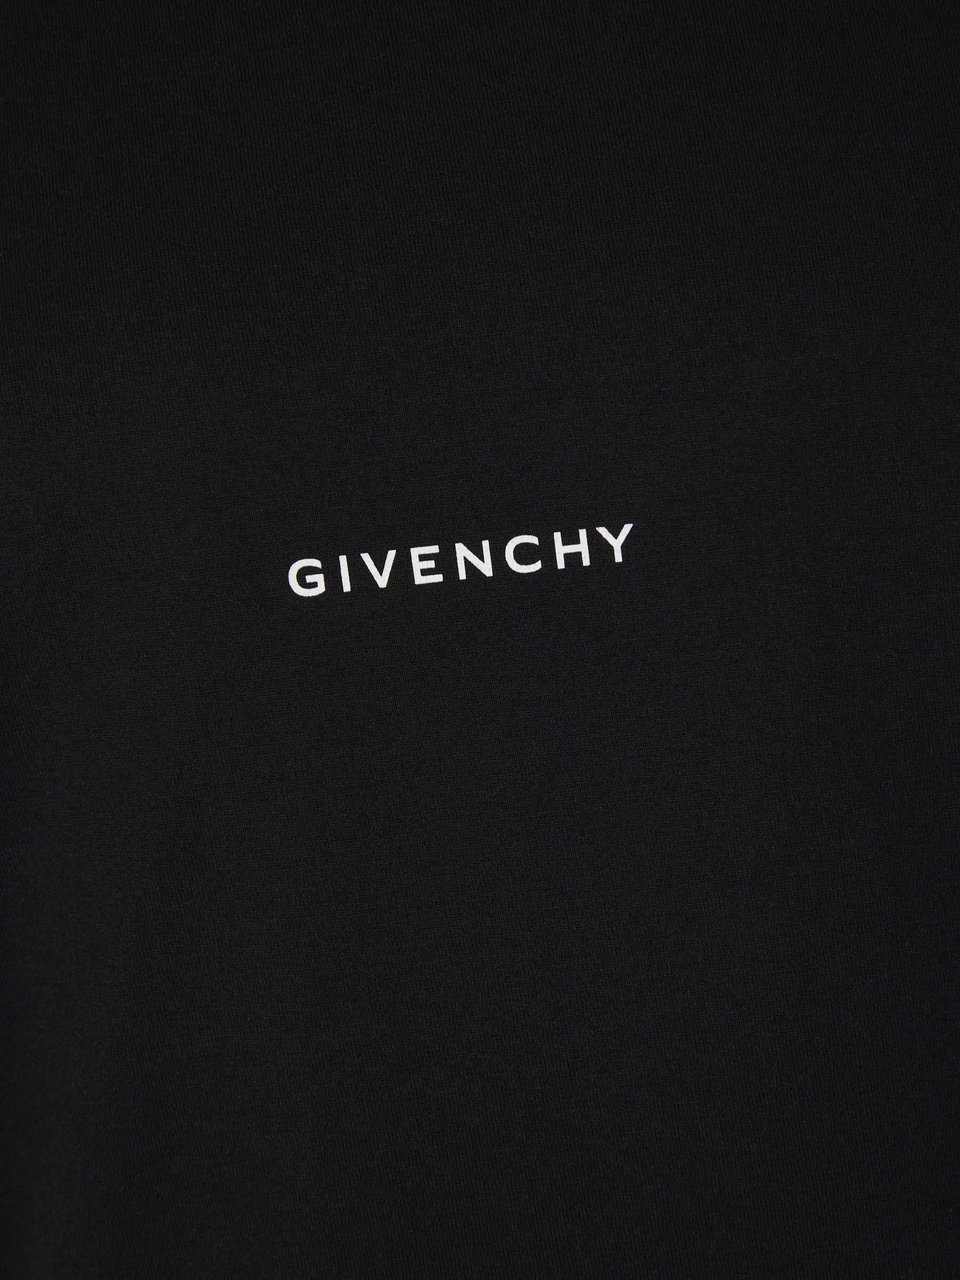 Givenchy Cotton Logo T-Shirt Zwart